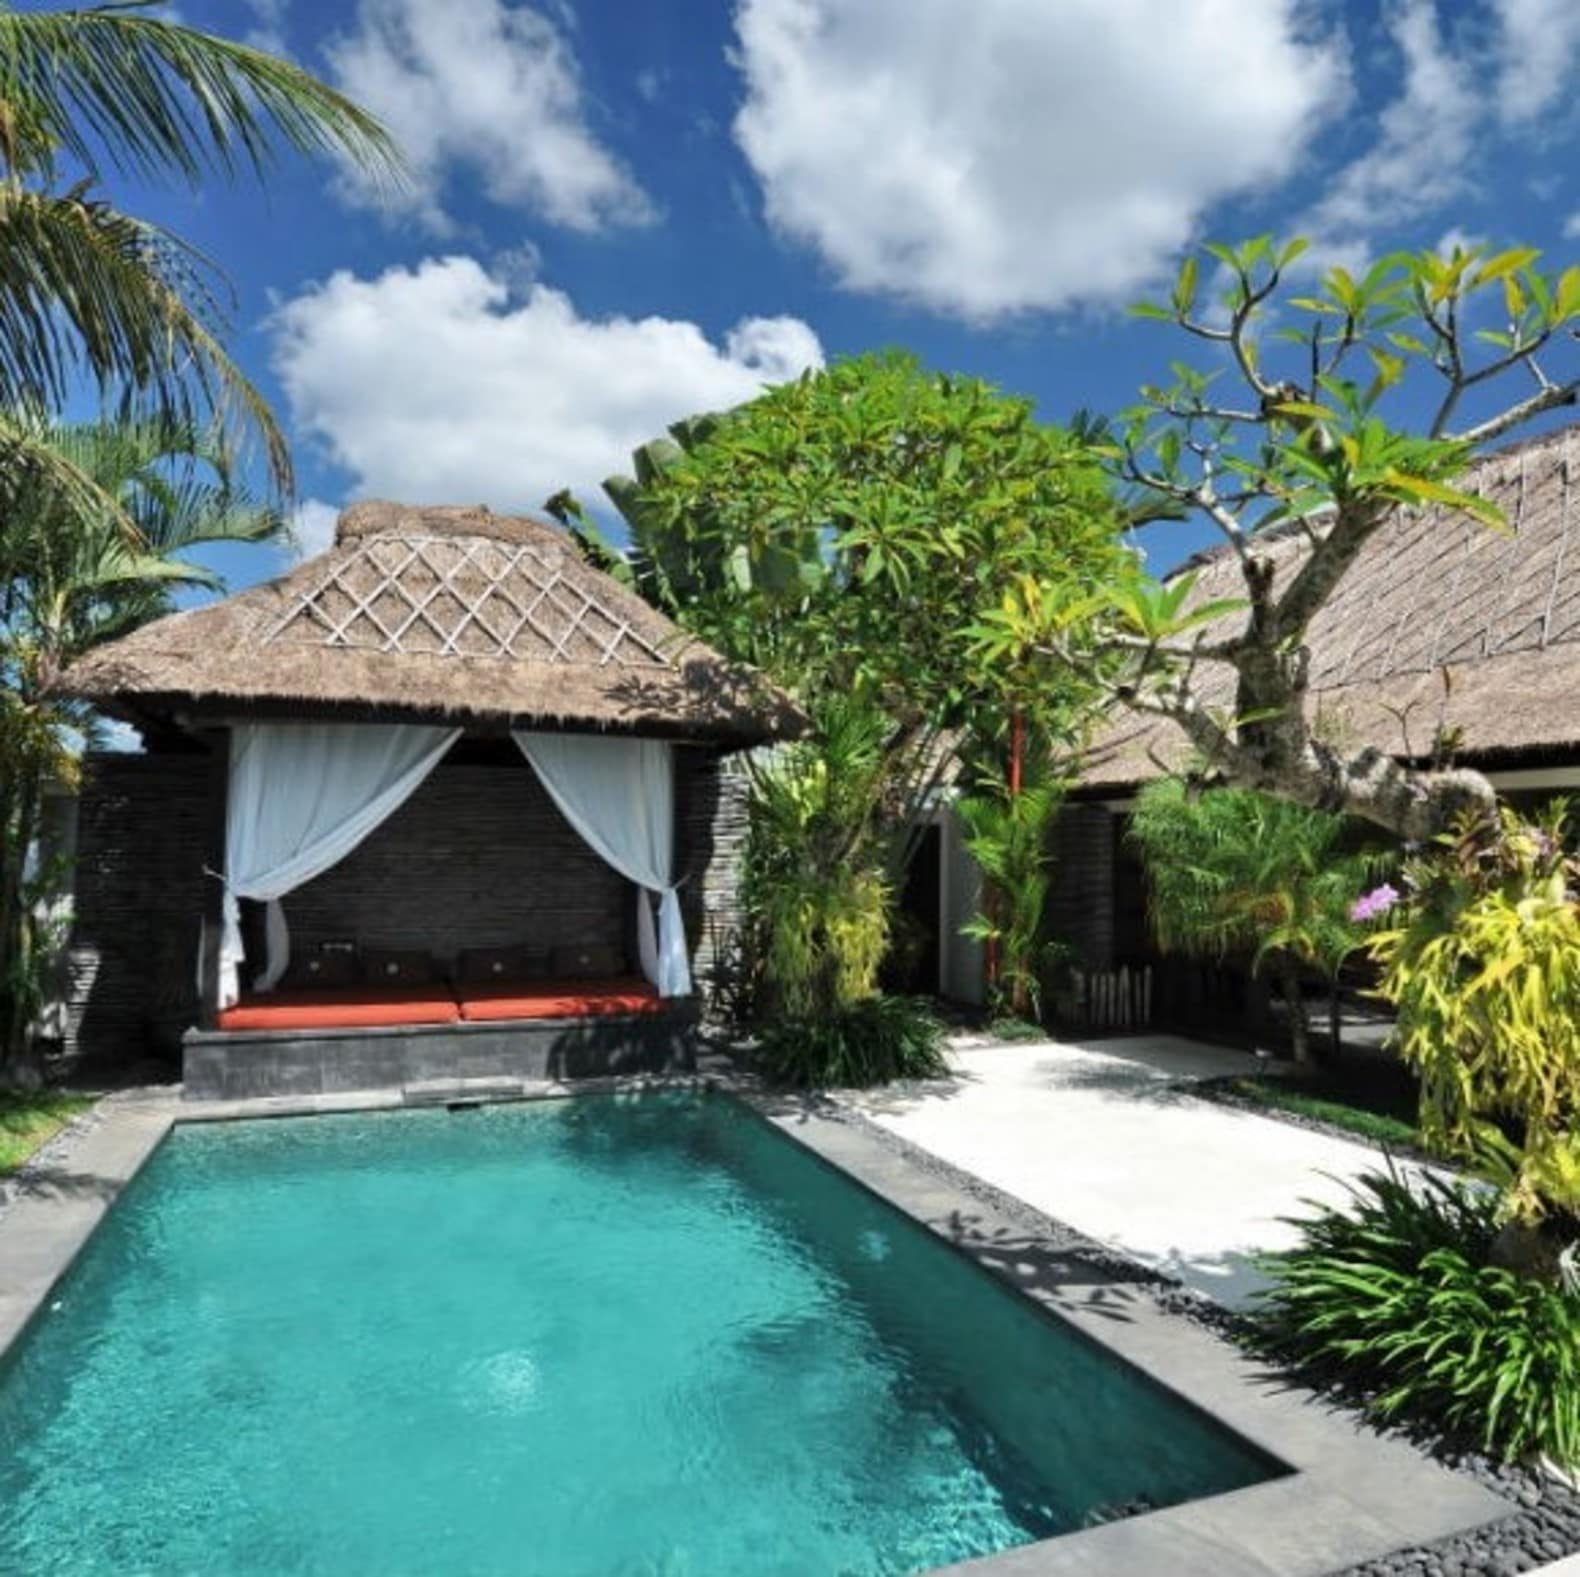 Villa avec piscine, jardin arboré, villa Martinique